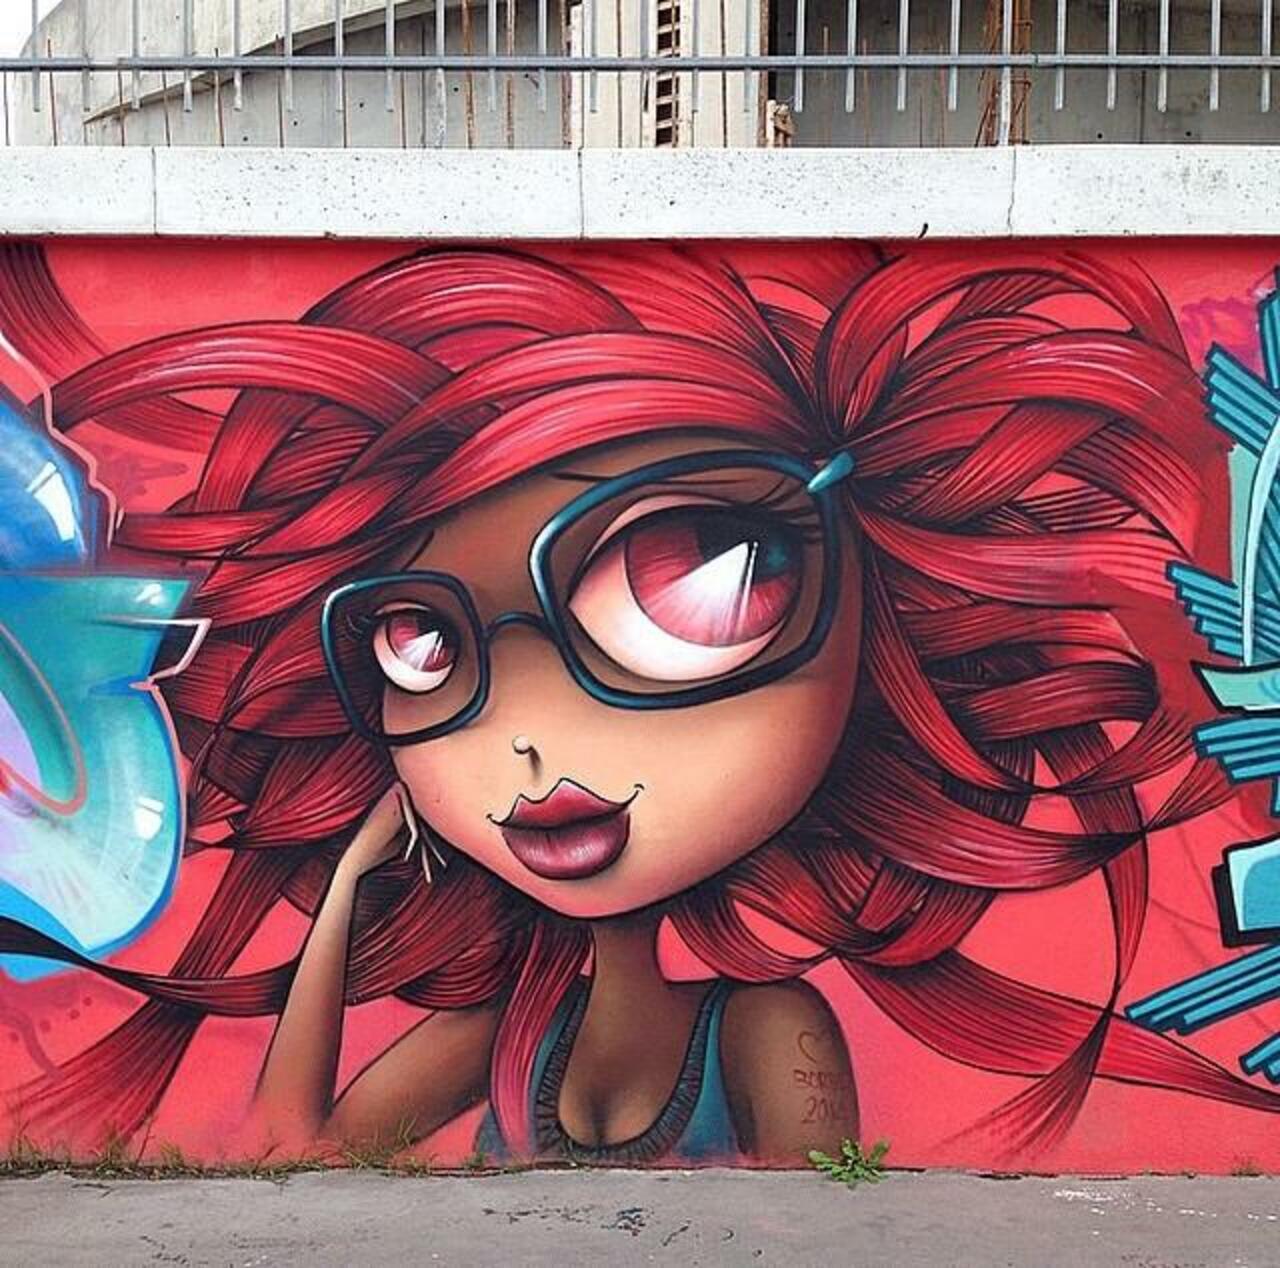 Wicked! "@DavDiProssimo: Wonderful Street Art mural by VinieGraffiti

#art #graffiti #streetart http://t.co/rK9CVyuNBd"